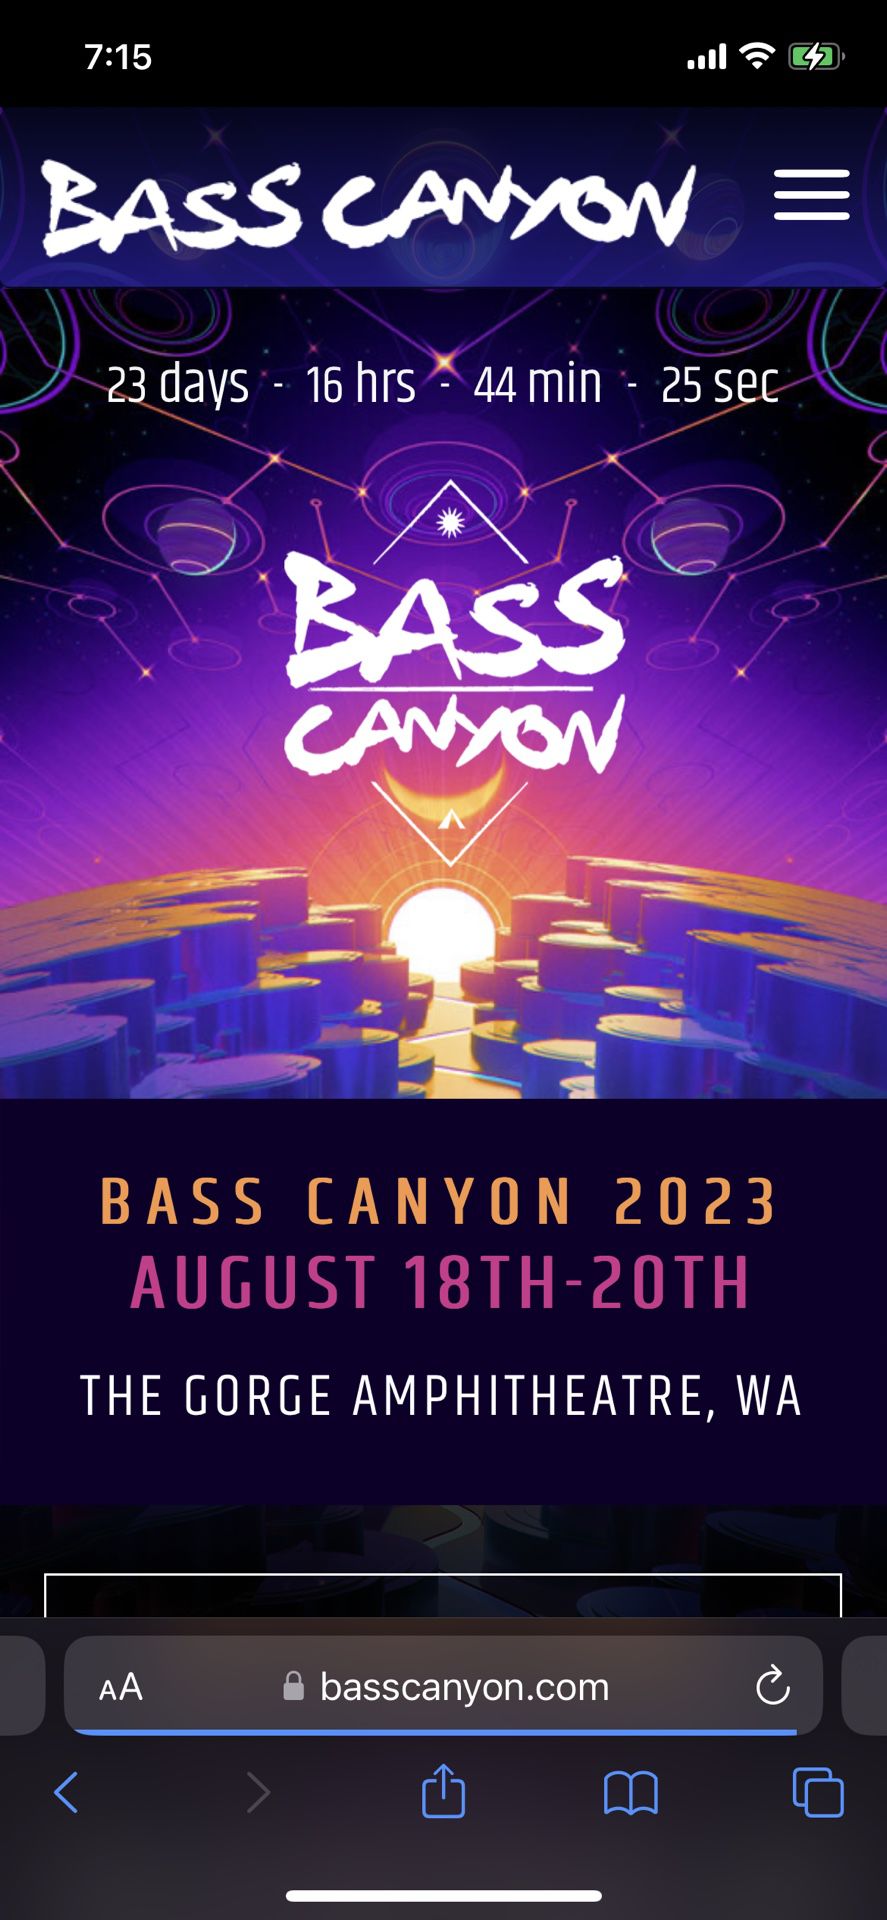 Bass Canyon 2023